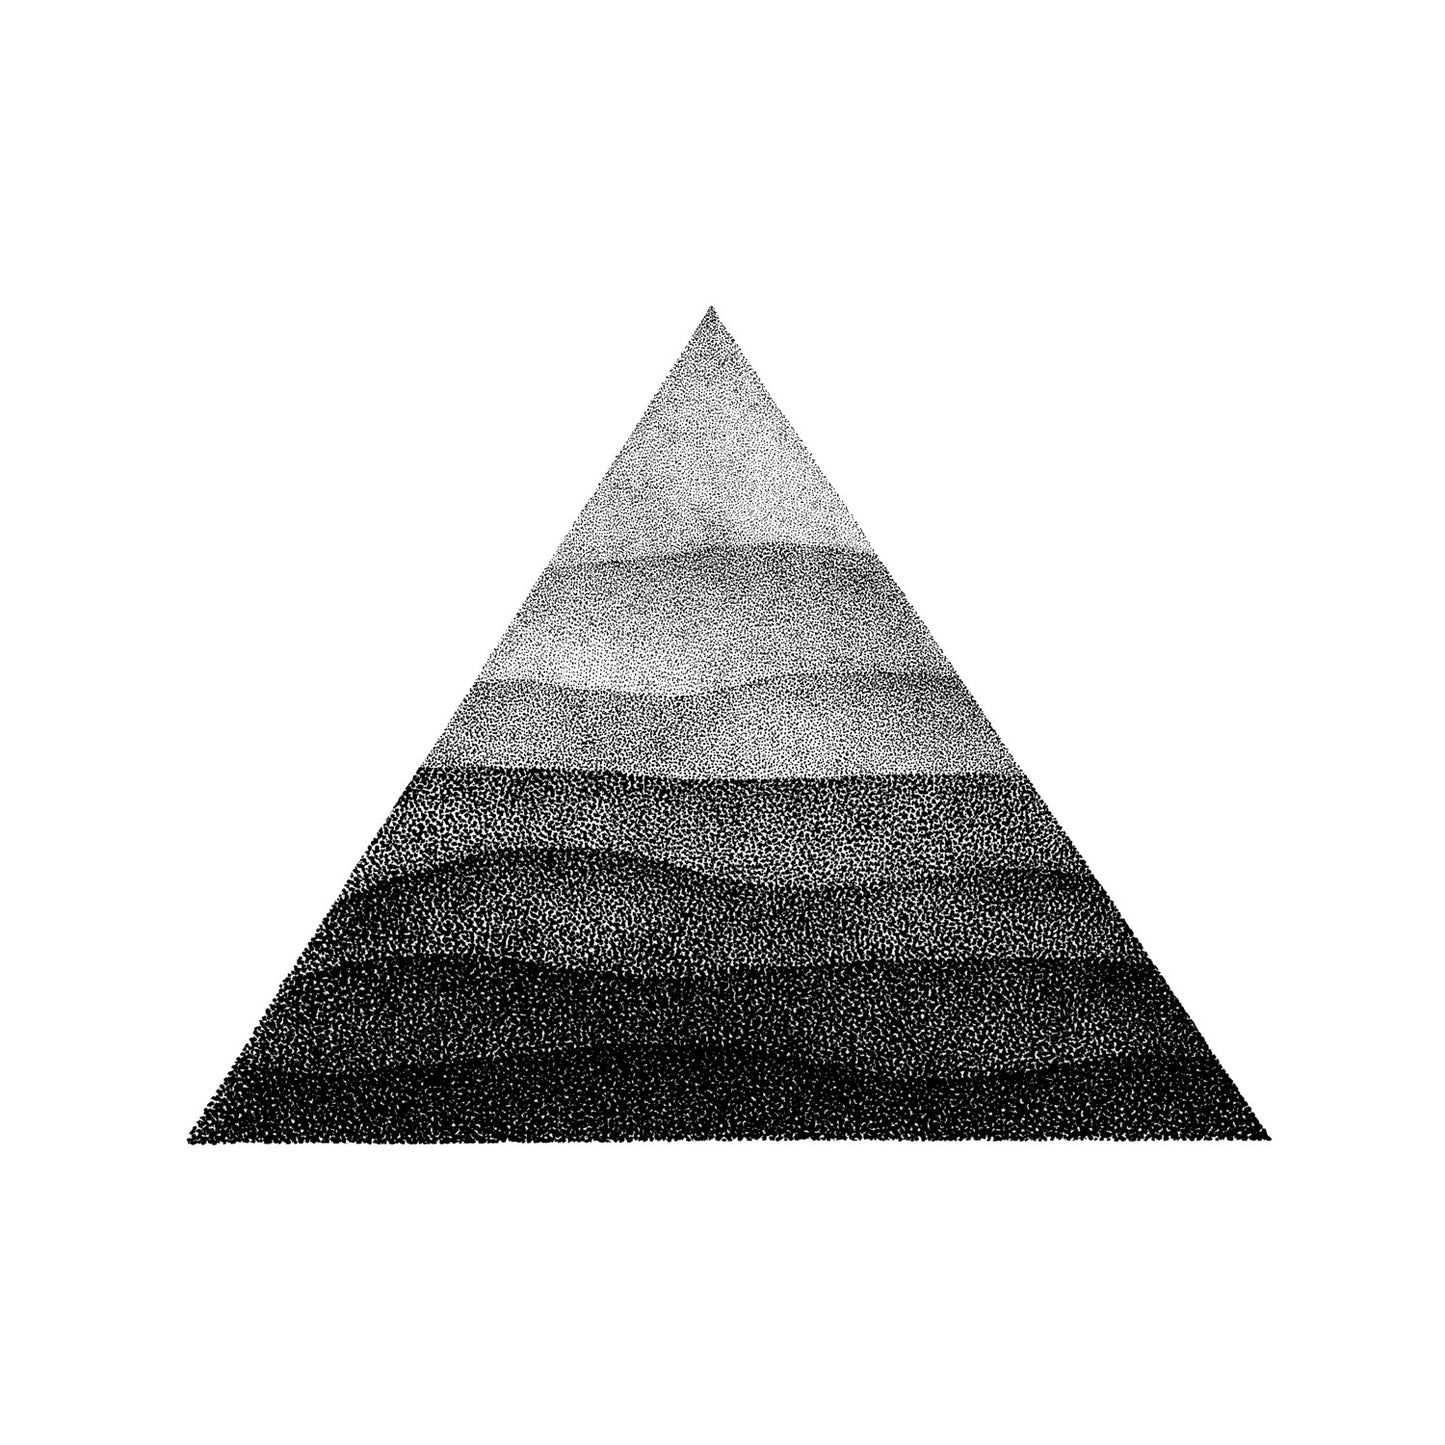 Triangle - Original drawing